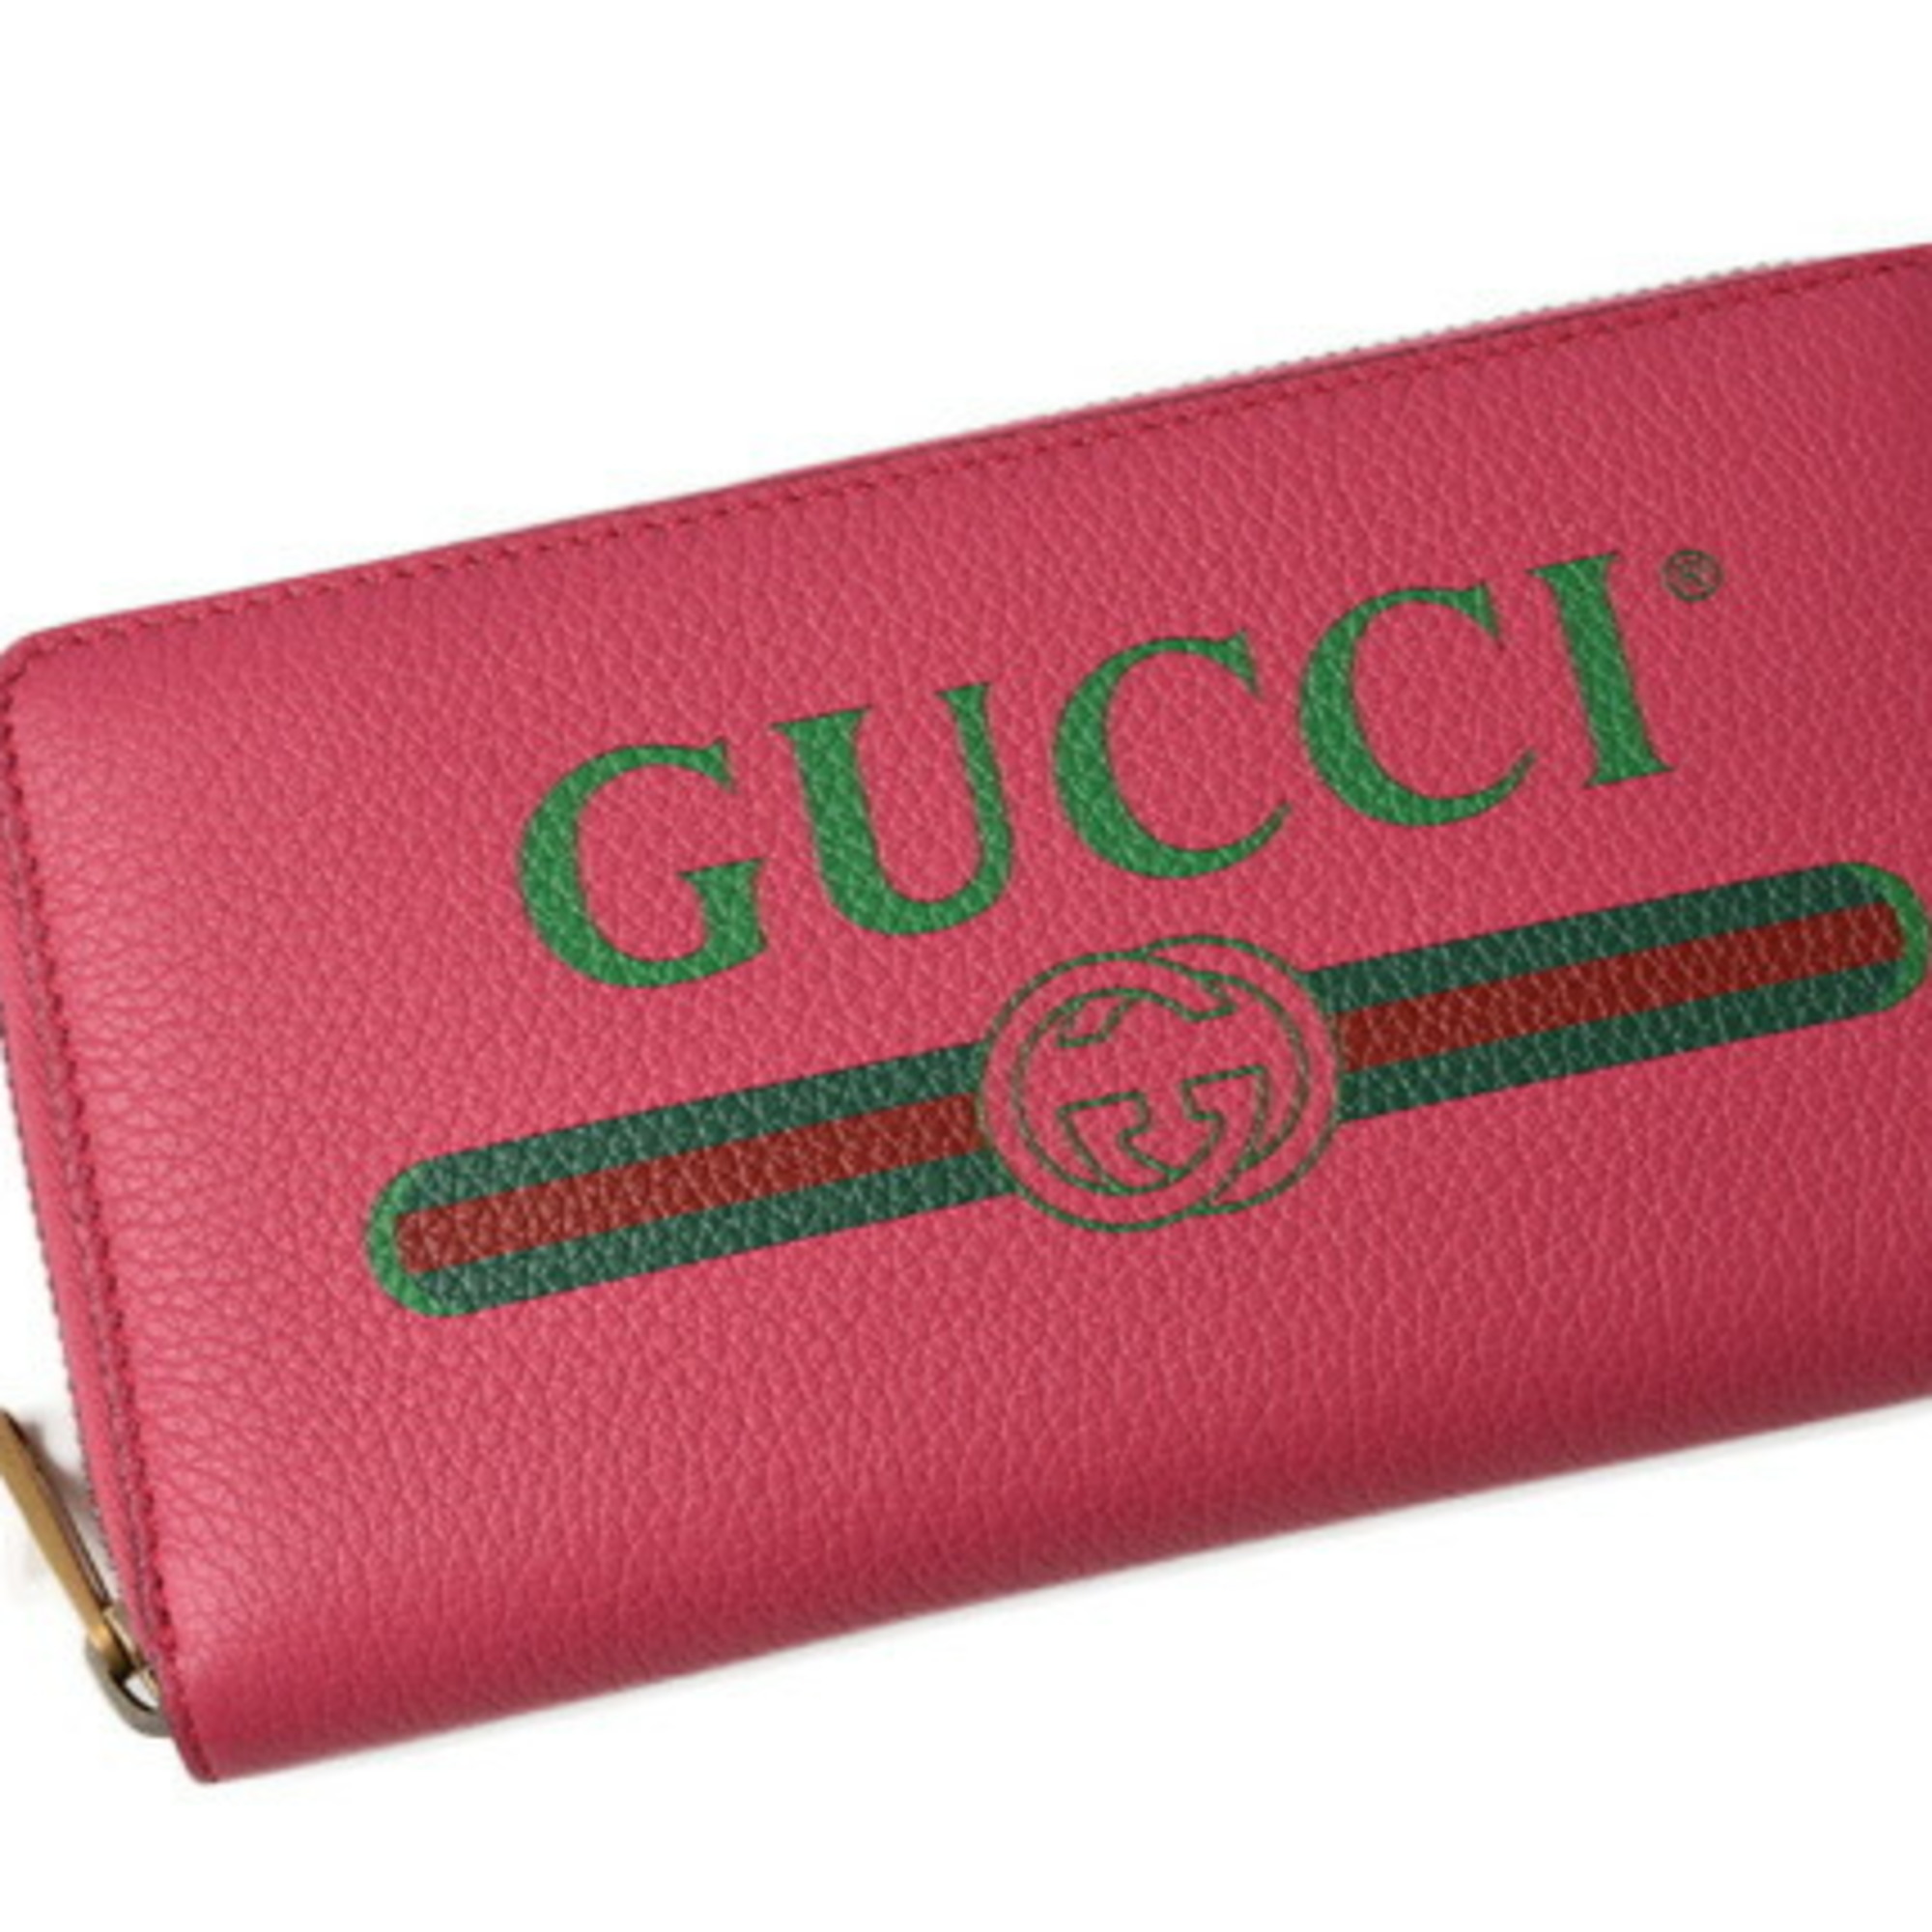 Gucci wallet GUCCI long print pink 496317 0GCAT 8840